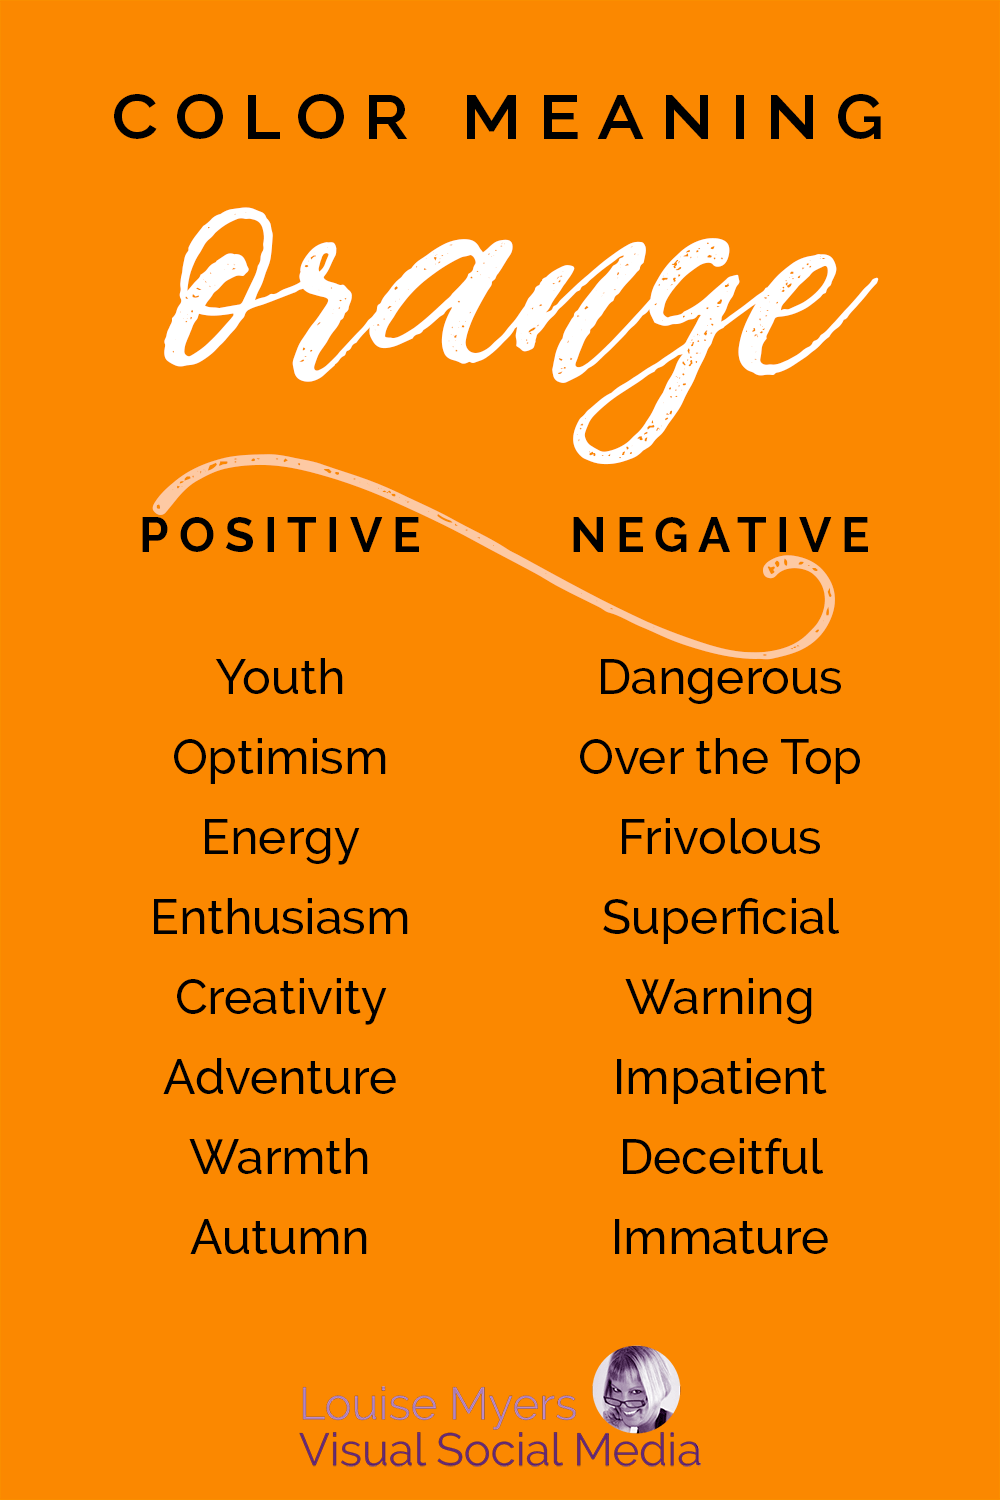 orange graphic lists positive and negative associations of the color Orange.